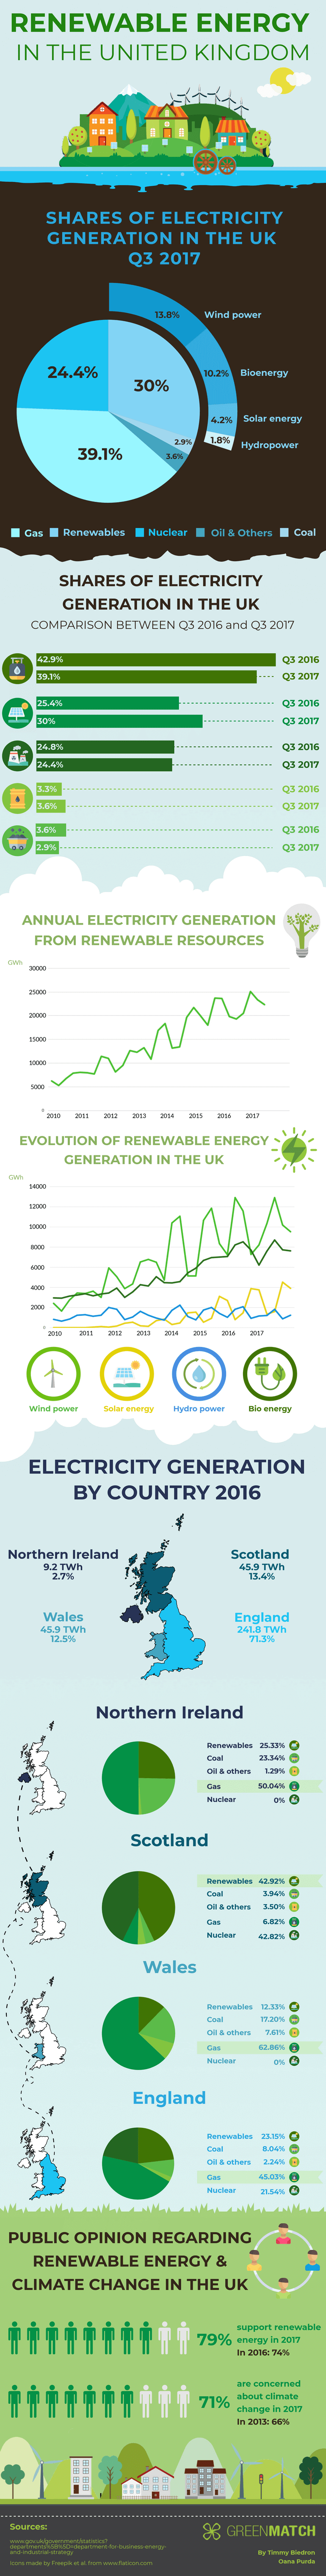 Renewable Energy in the UK Infographic